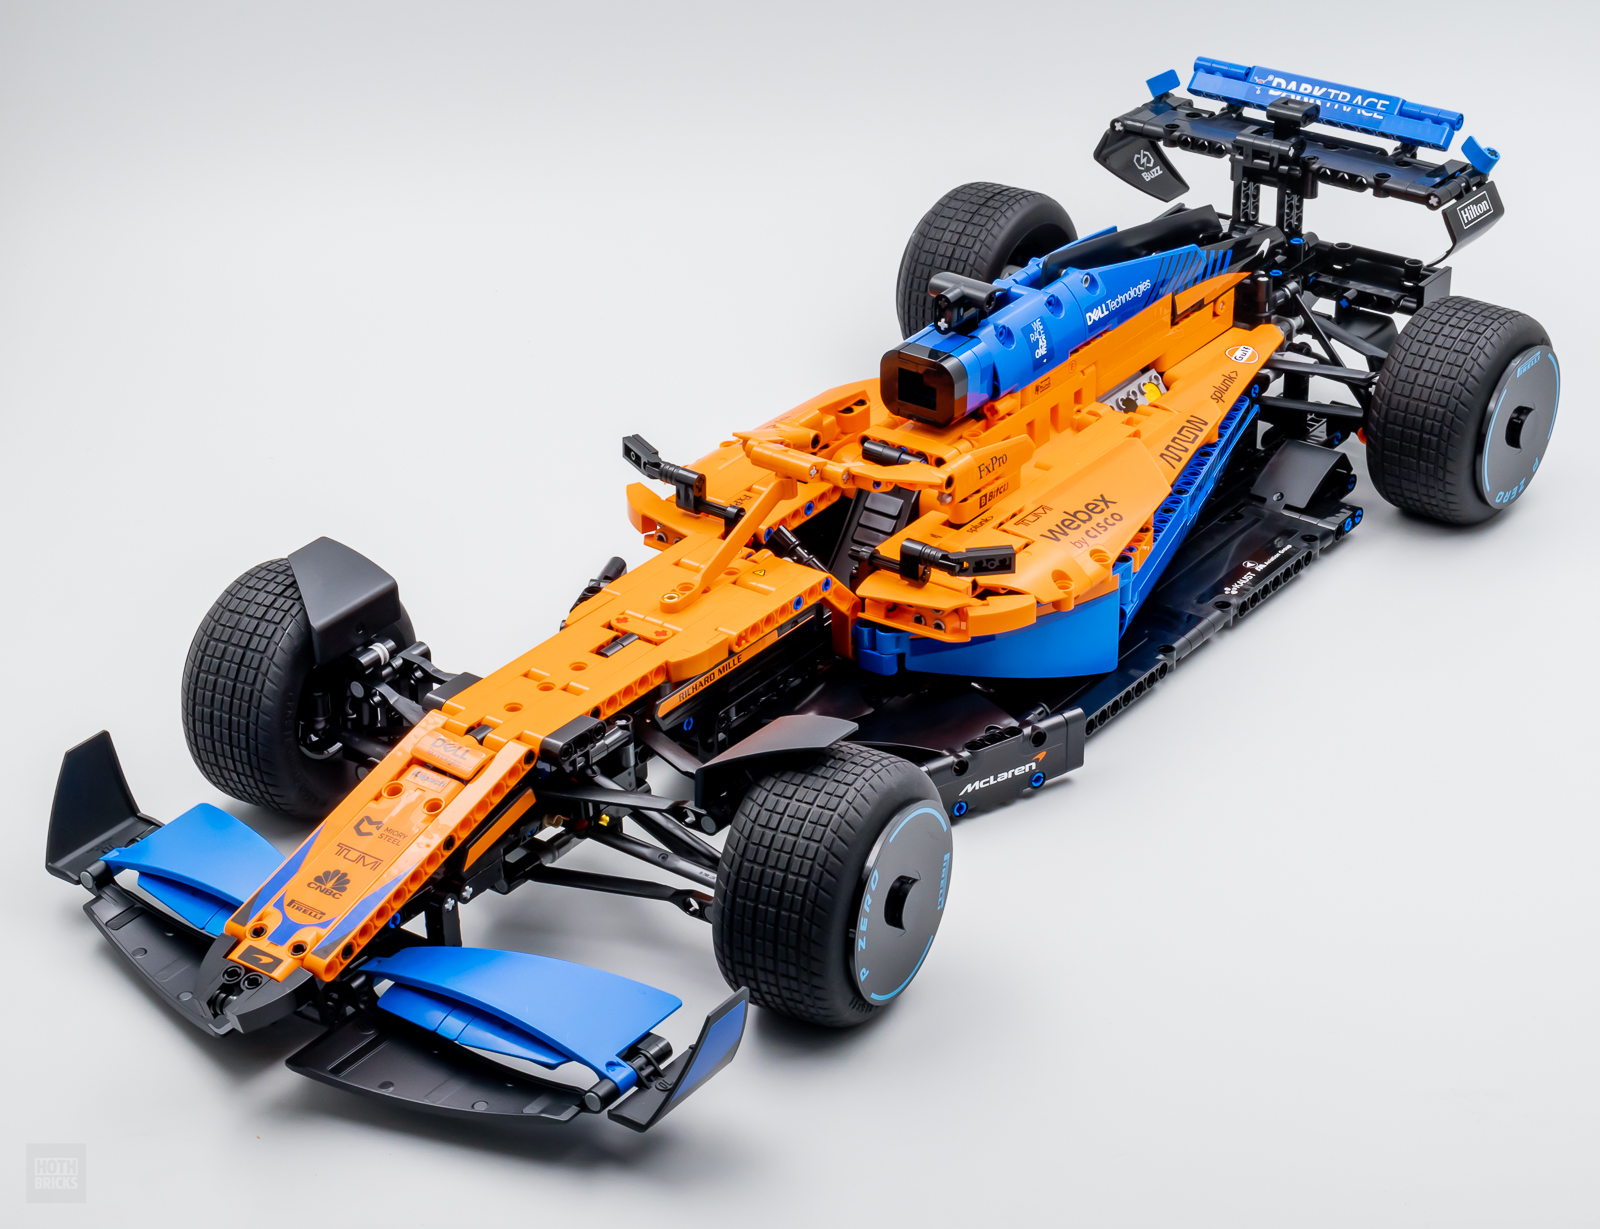 LEGO 42141 McLaren Formula 1 Race Car review